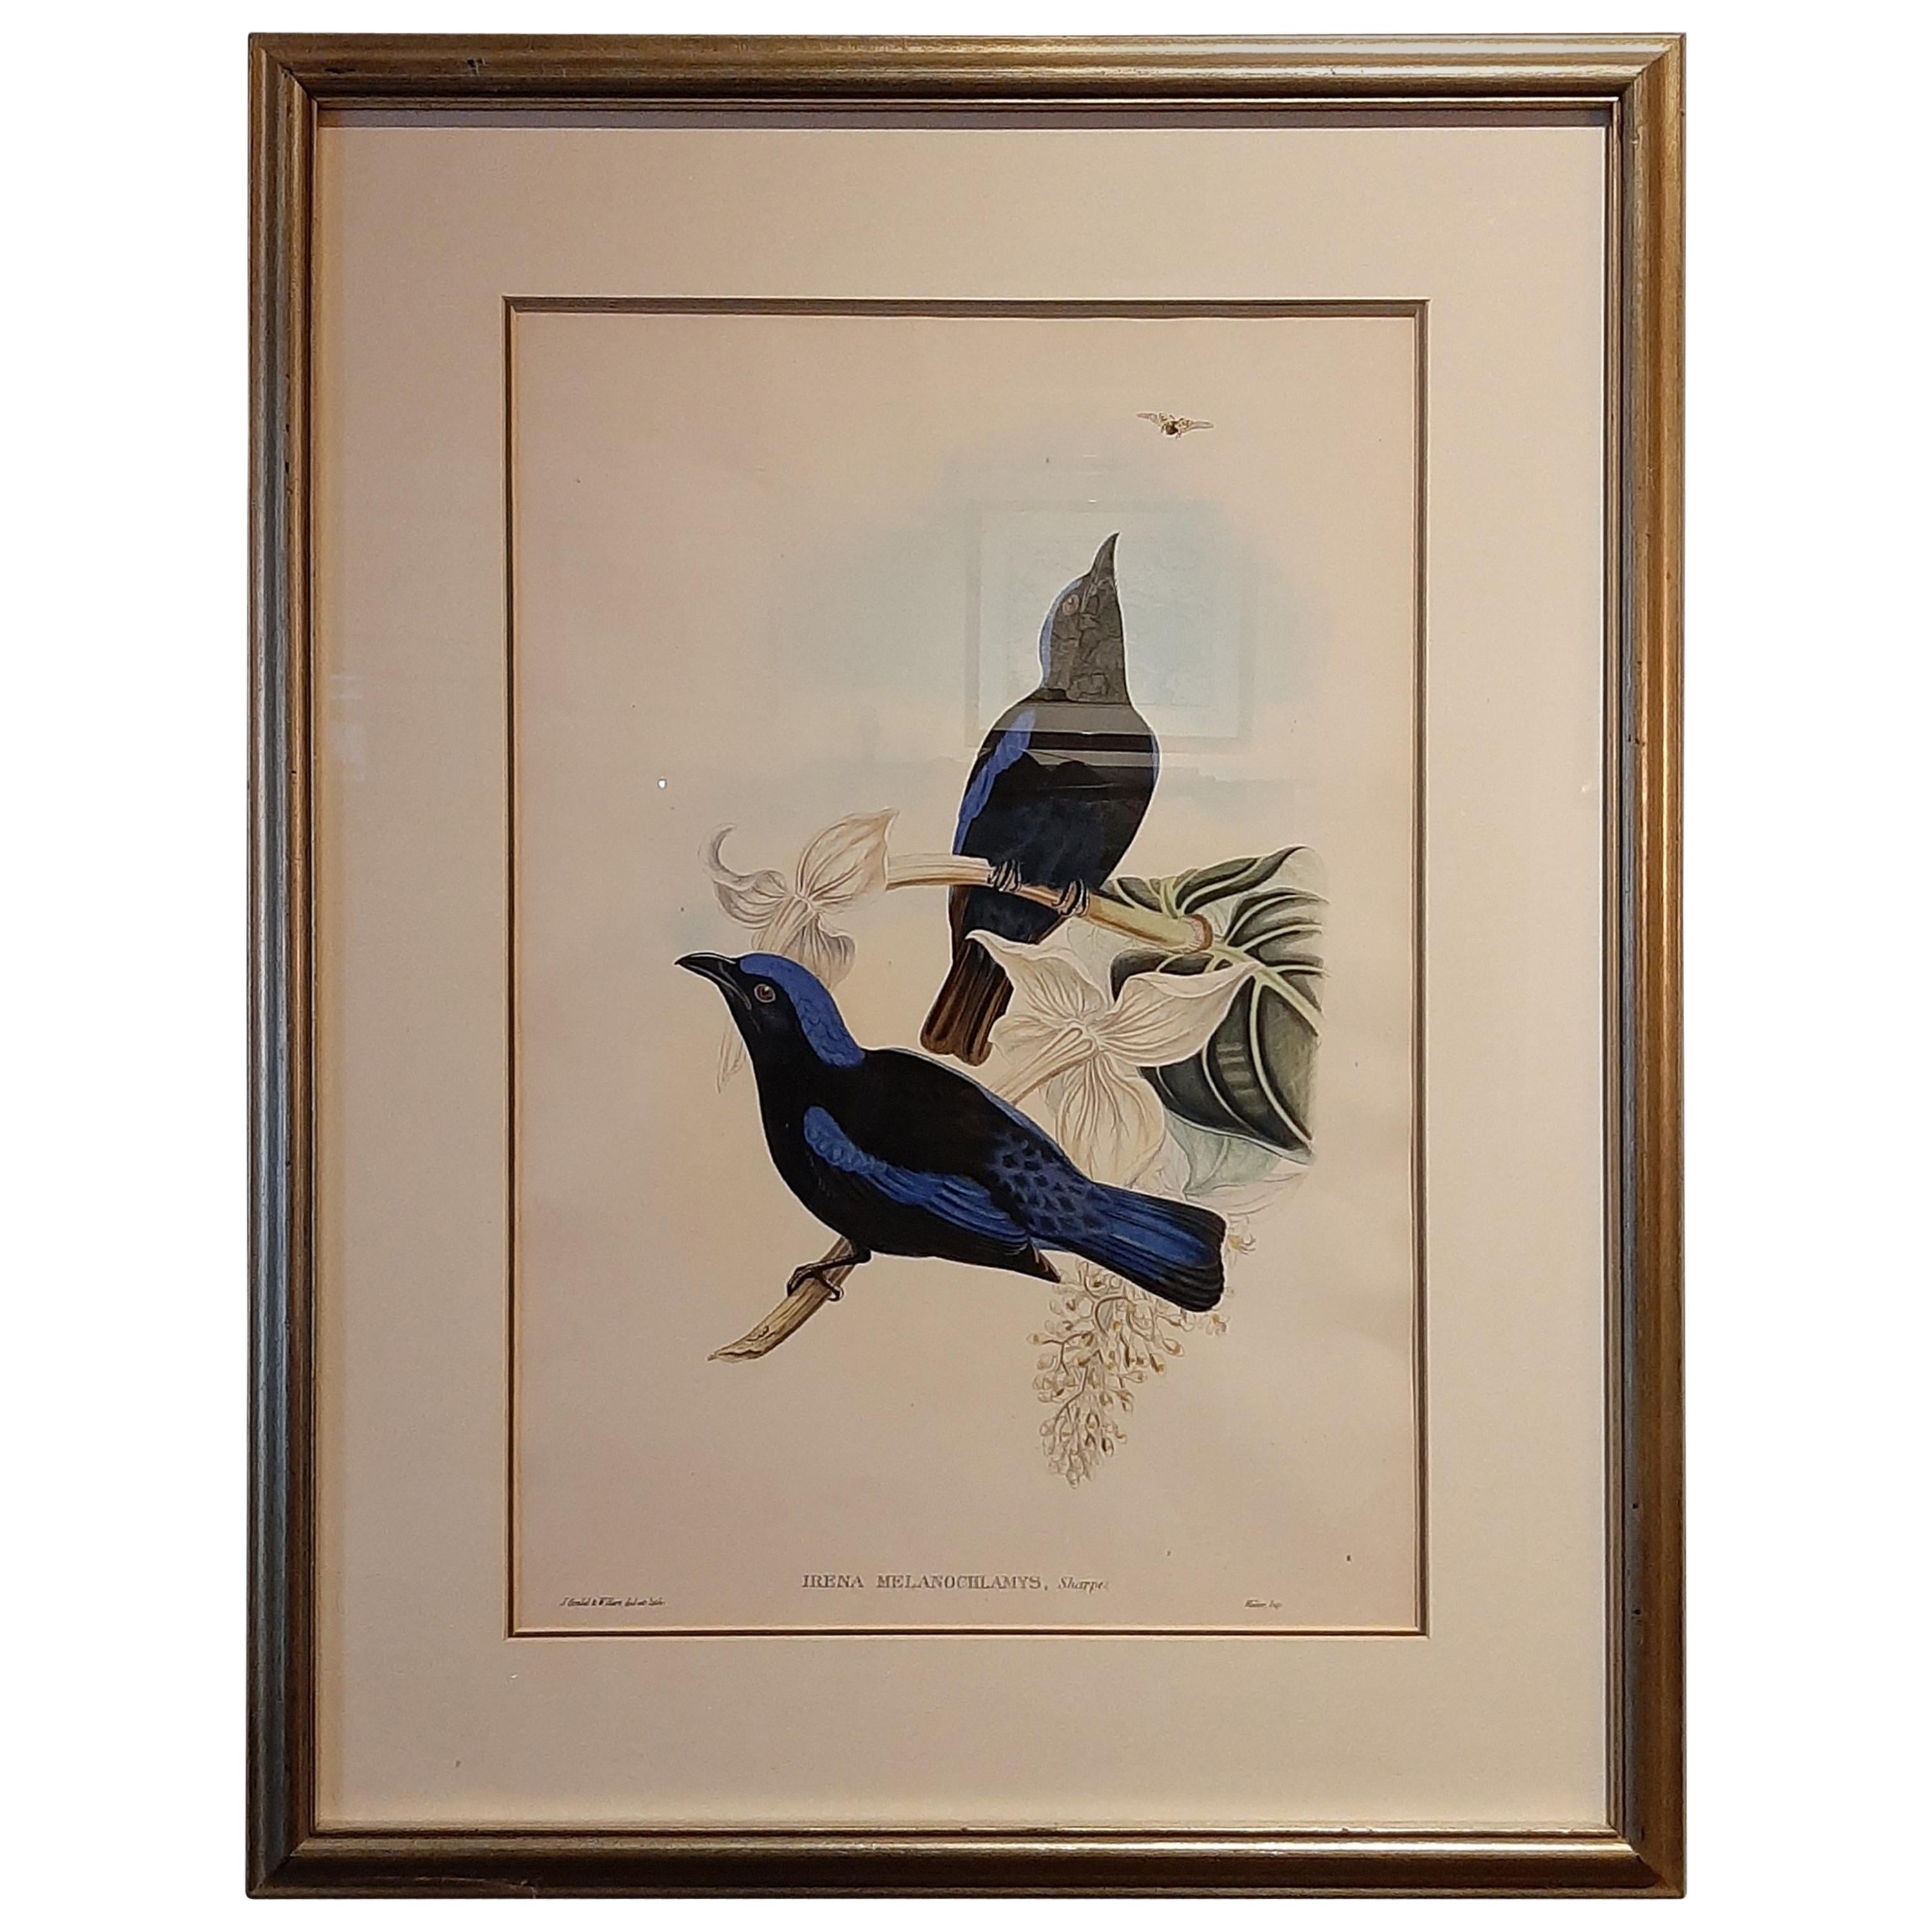 Antique Bird Print of the Black-Mantled Fairy Bluebird by Gould, circa 1870